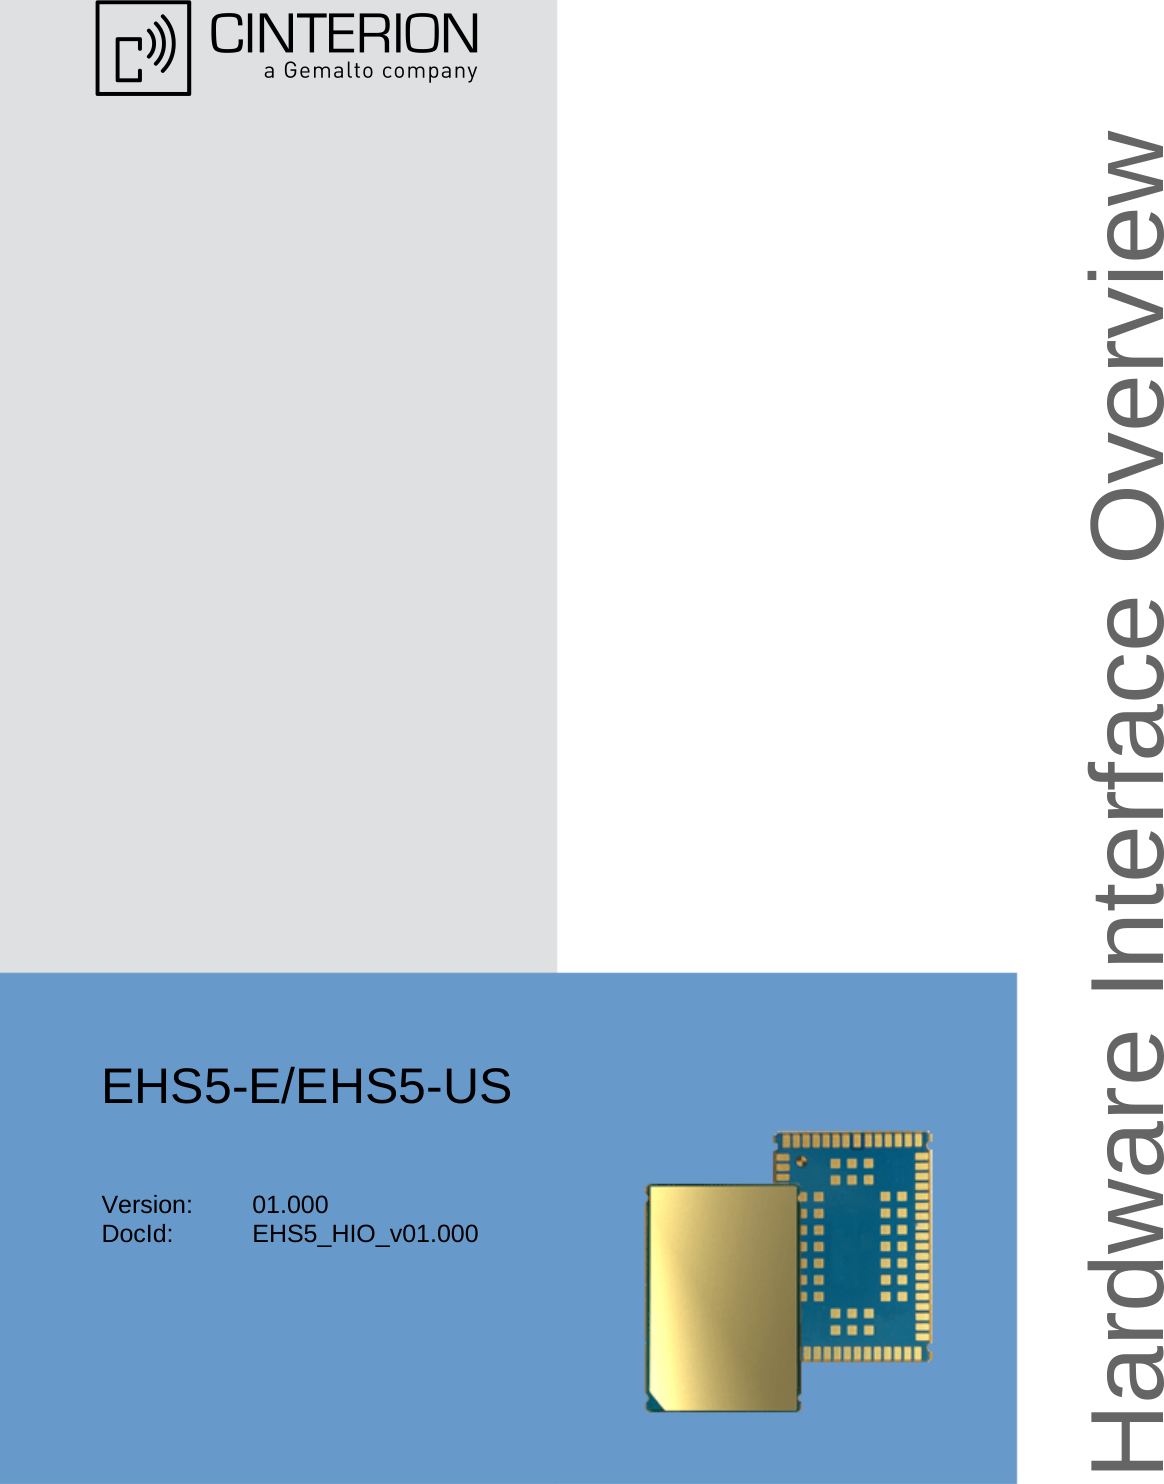 EHS5-E/EHS5-USVersion: 01.000DocId: EHS5_HIO_v01.000Hardware Interface Overview